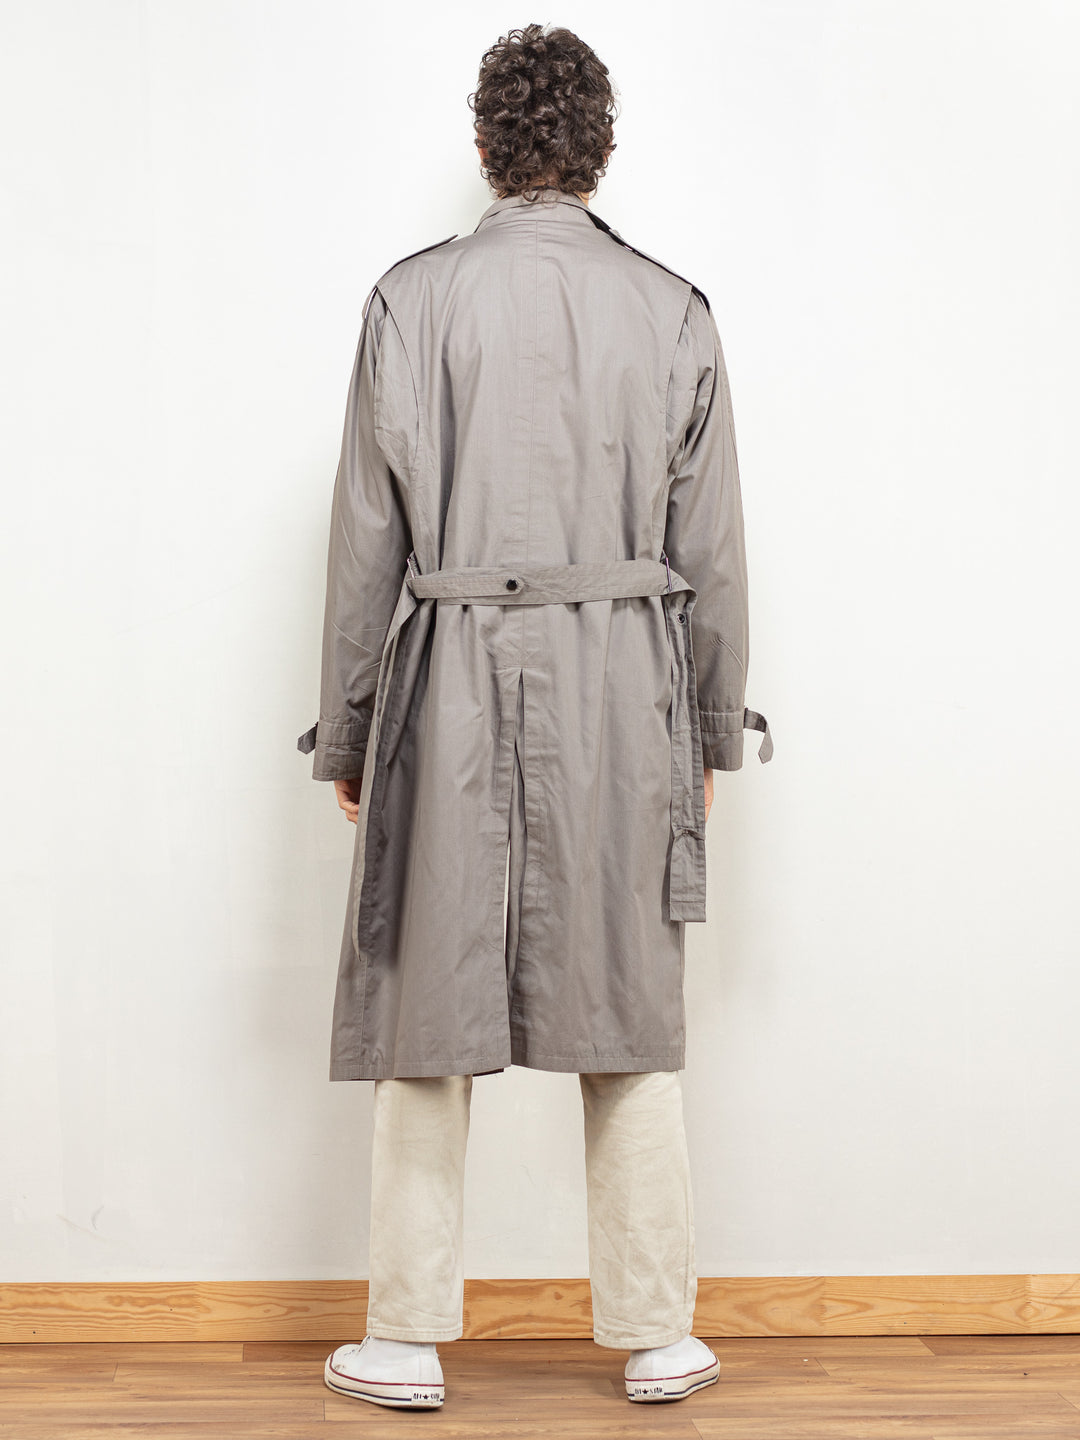 Men Trench Coat 90's grey long overcoat trench style maxi coat classic minimalist mac style coat classy preppy menswear size large L